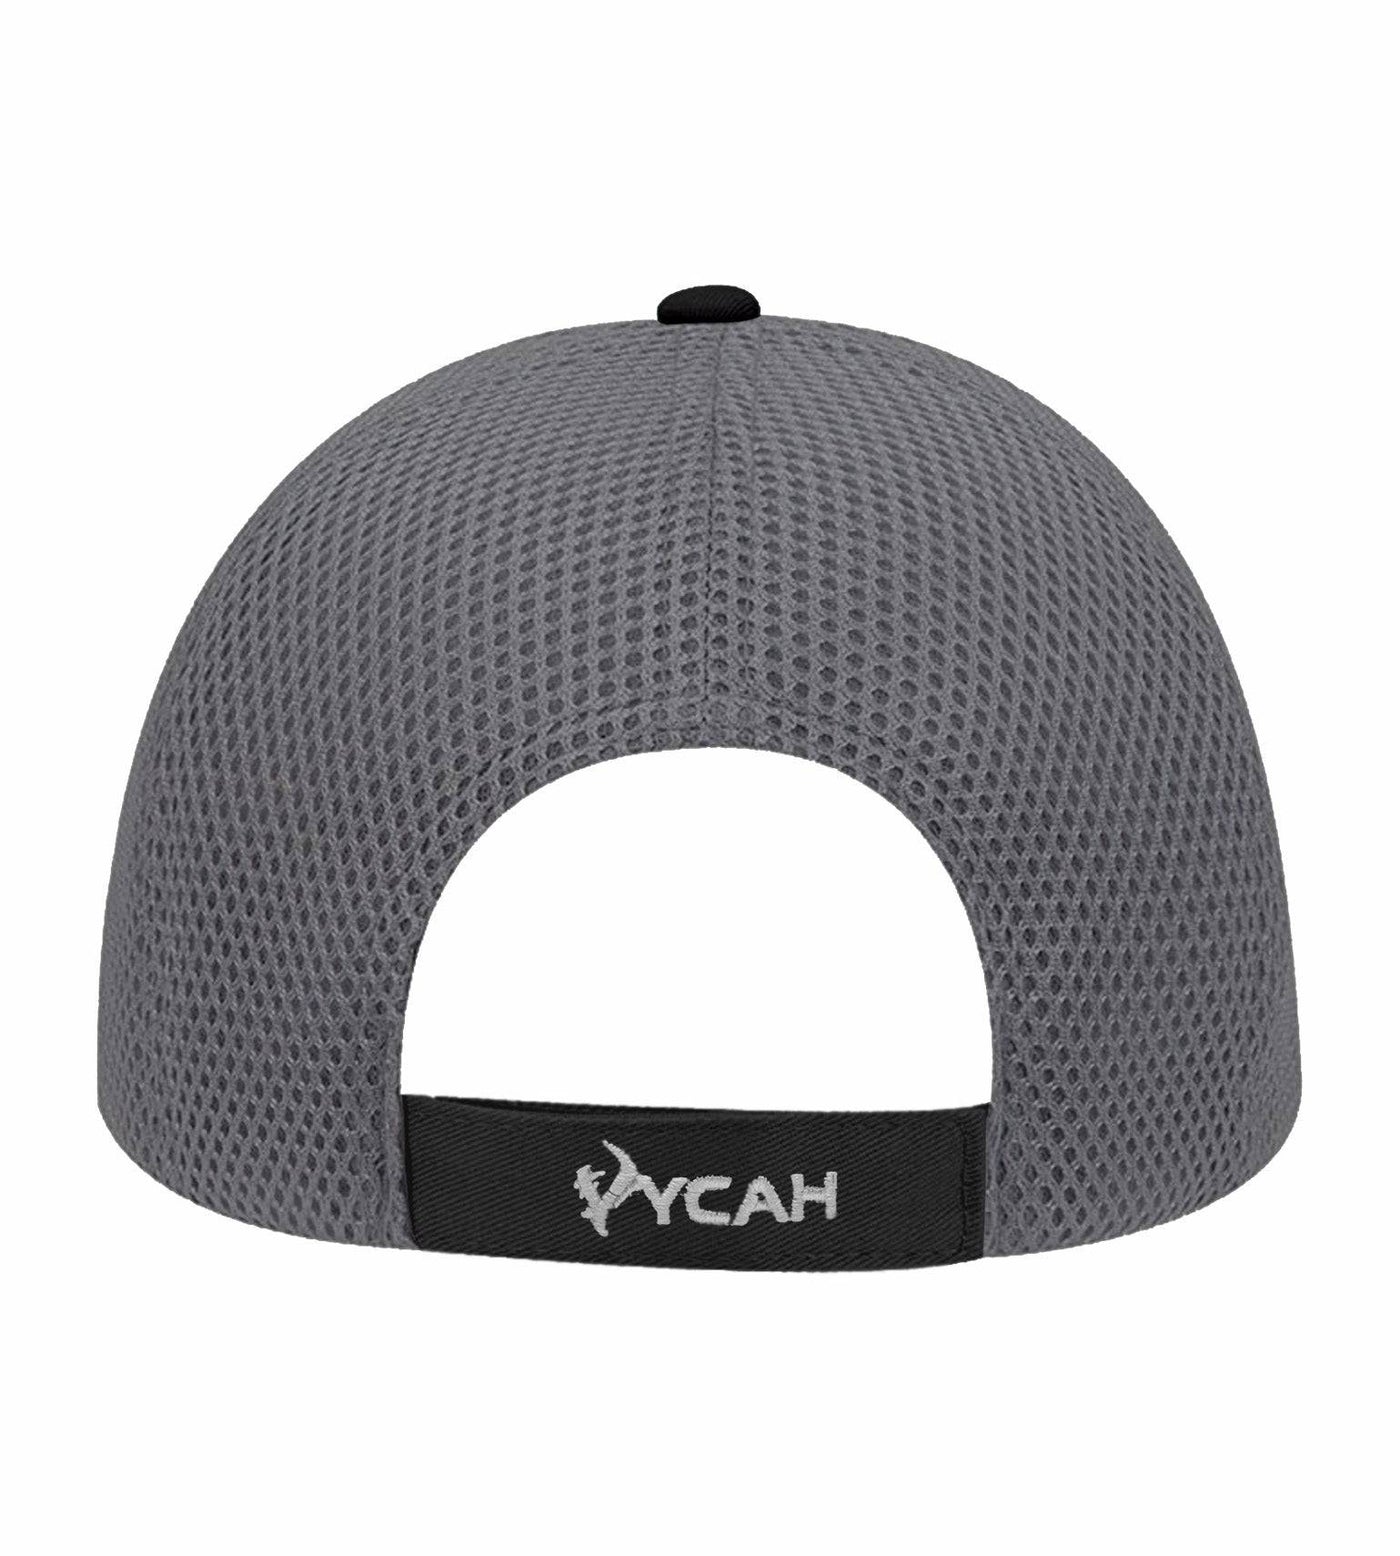 Onyx Cap - Vycah